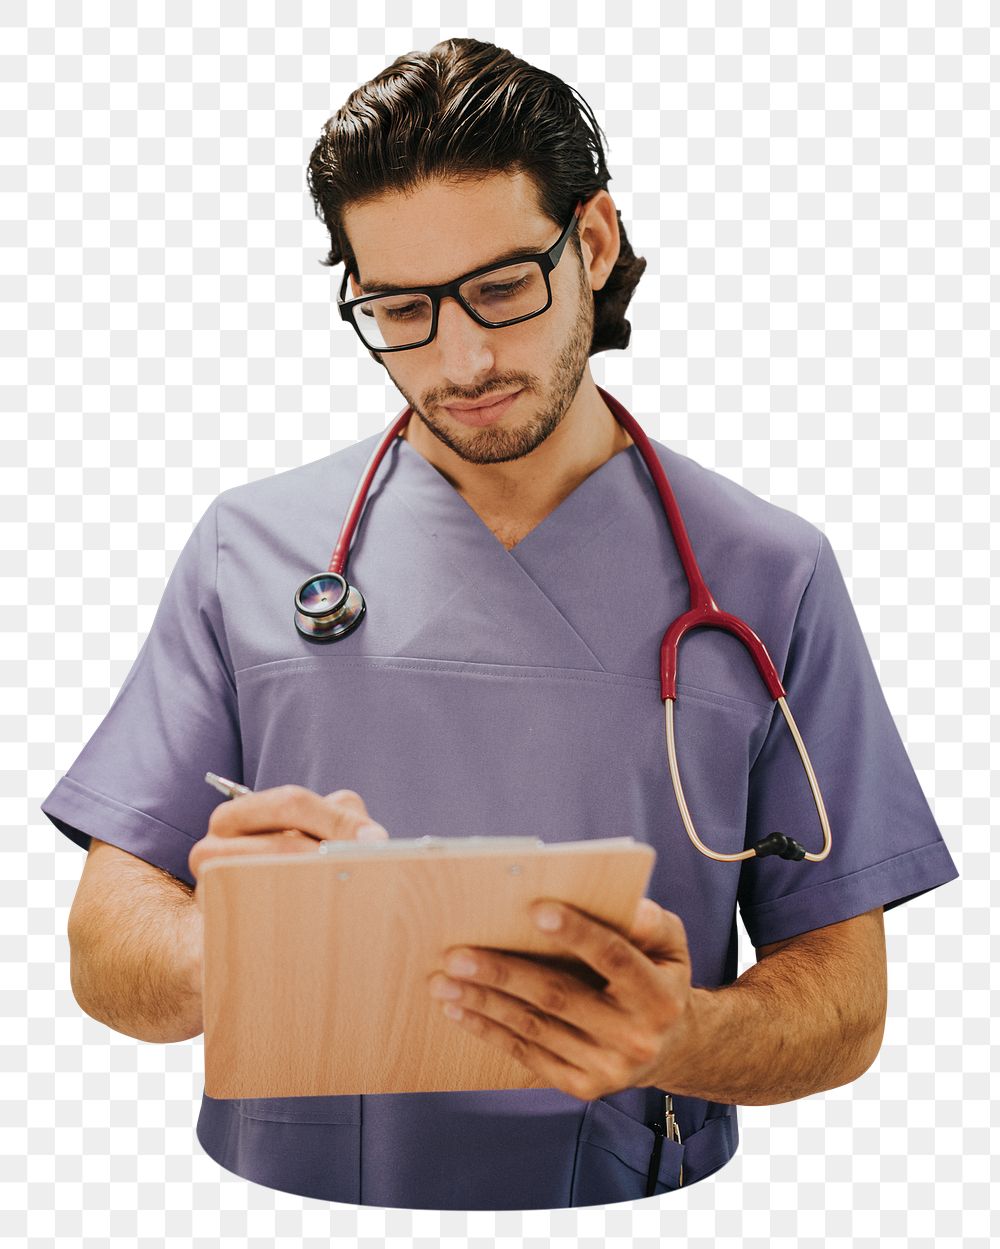 Male doctor png career sticker, transparent background